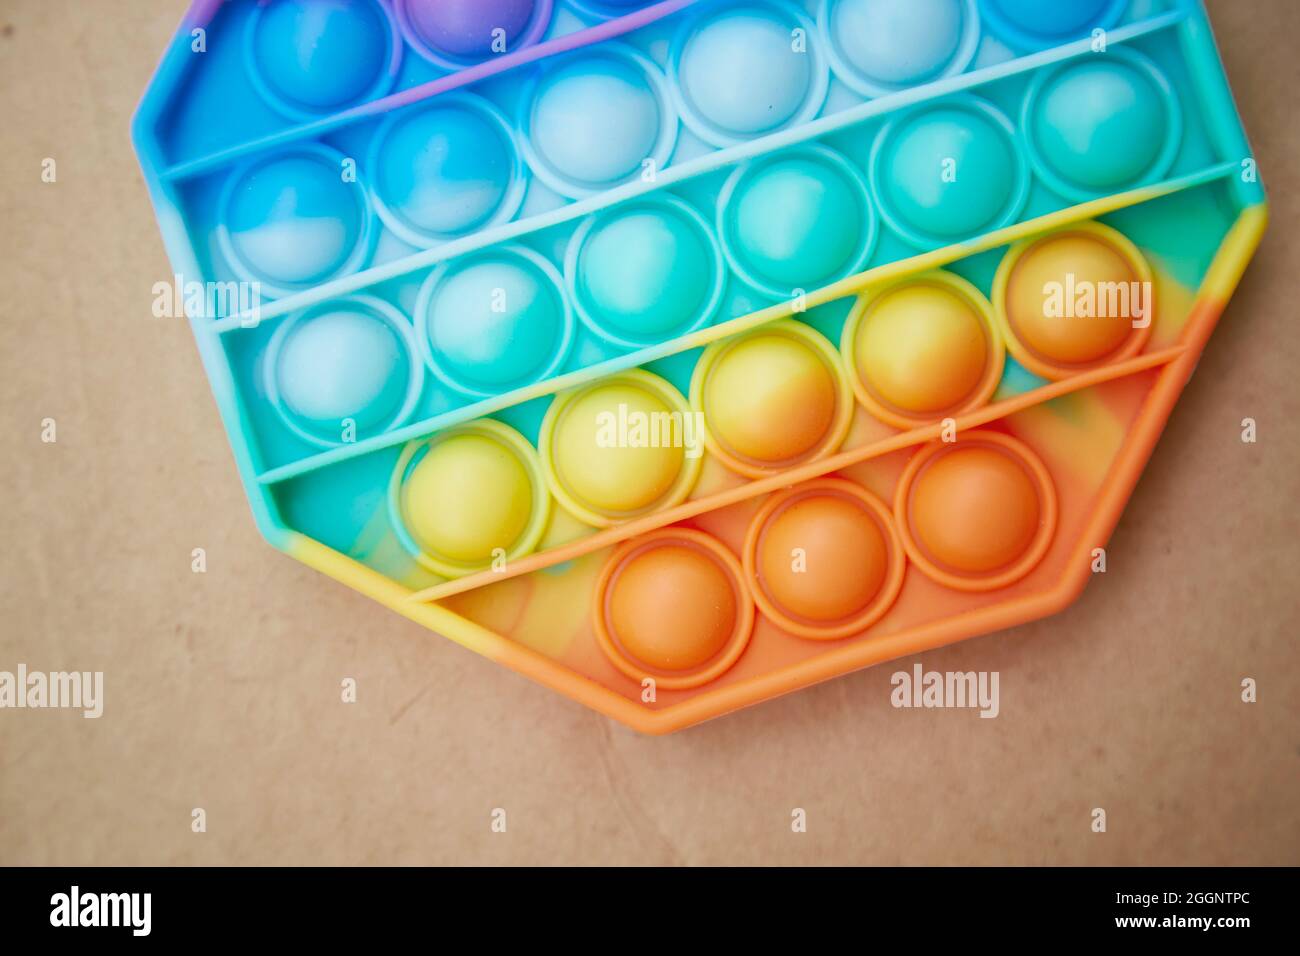 New trendy silicone toy close up. Rainbow sensory fidget. Colorful antistress sensory toy fidget pop it toy. Antistress trendy pop it toy. High quality photo Stock Photo